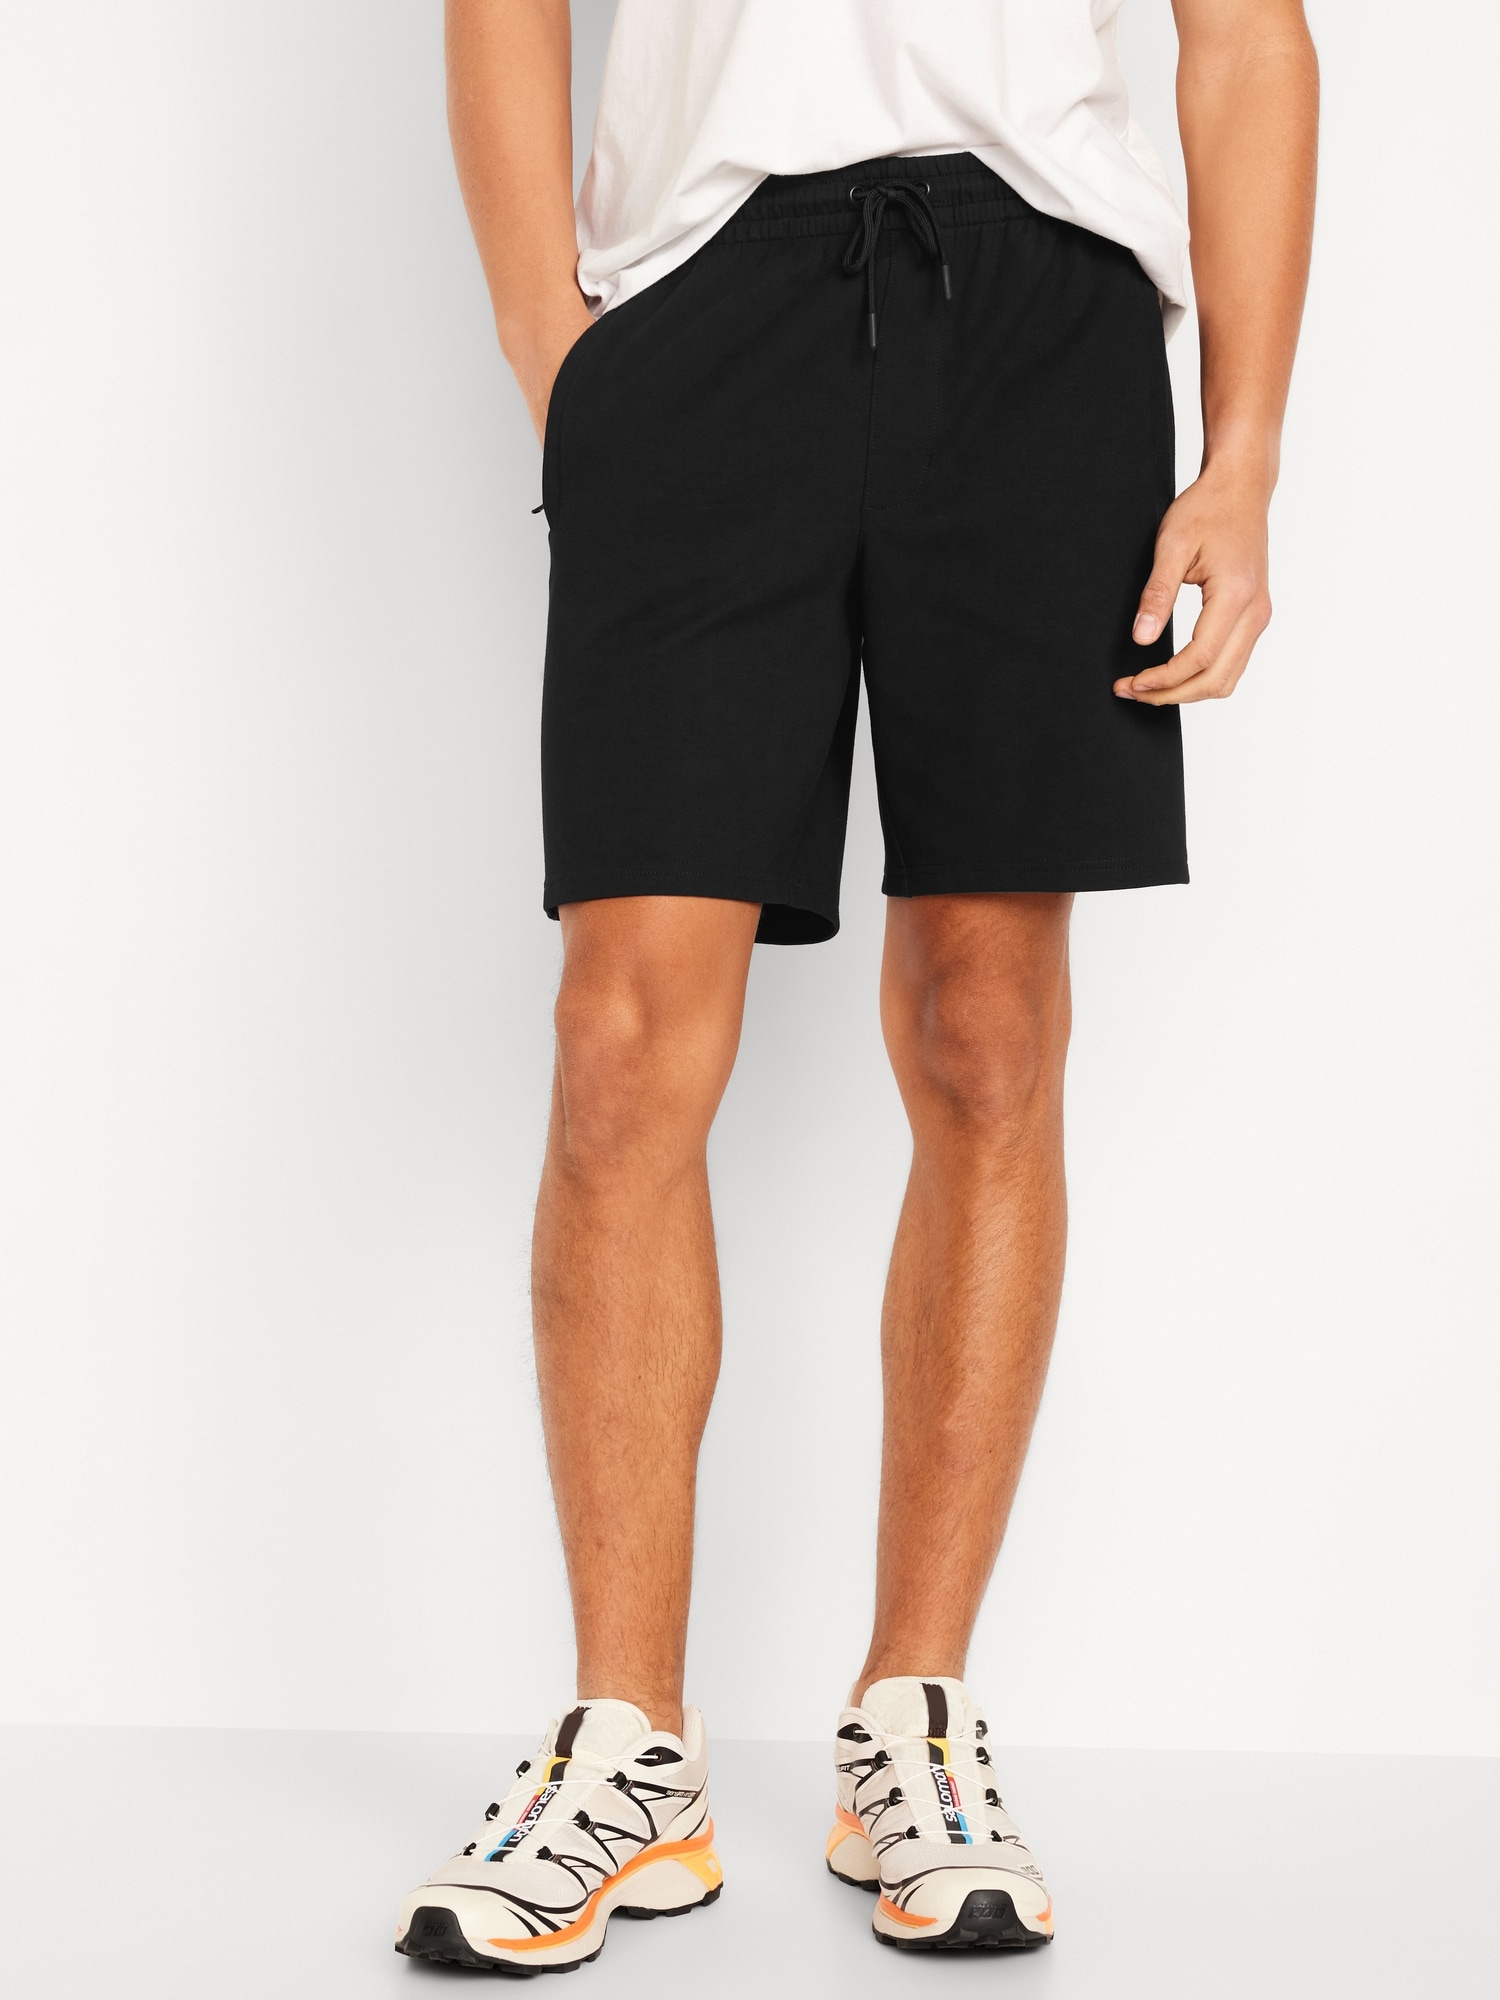 Dynamic Fleece Shorts for Men - 8-inch inseam